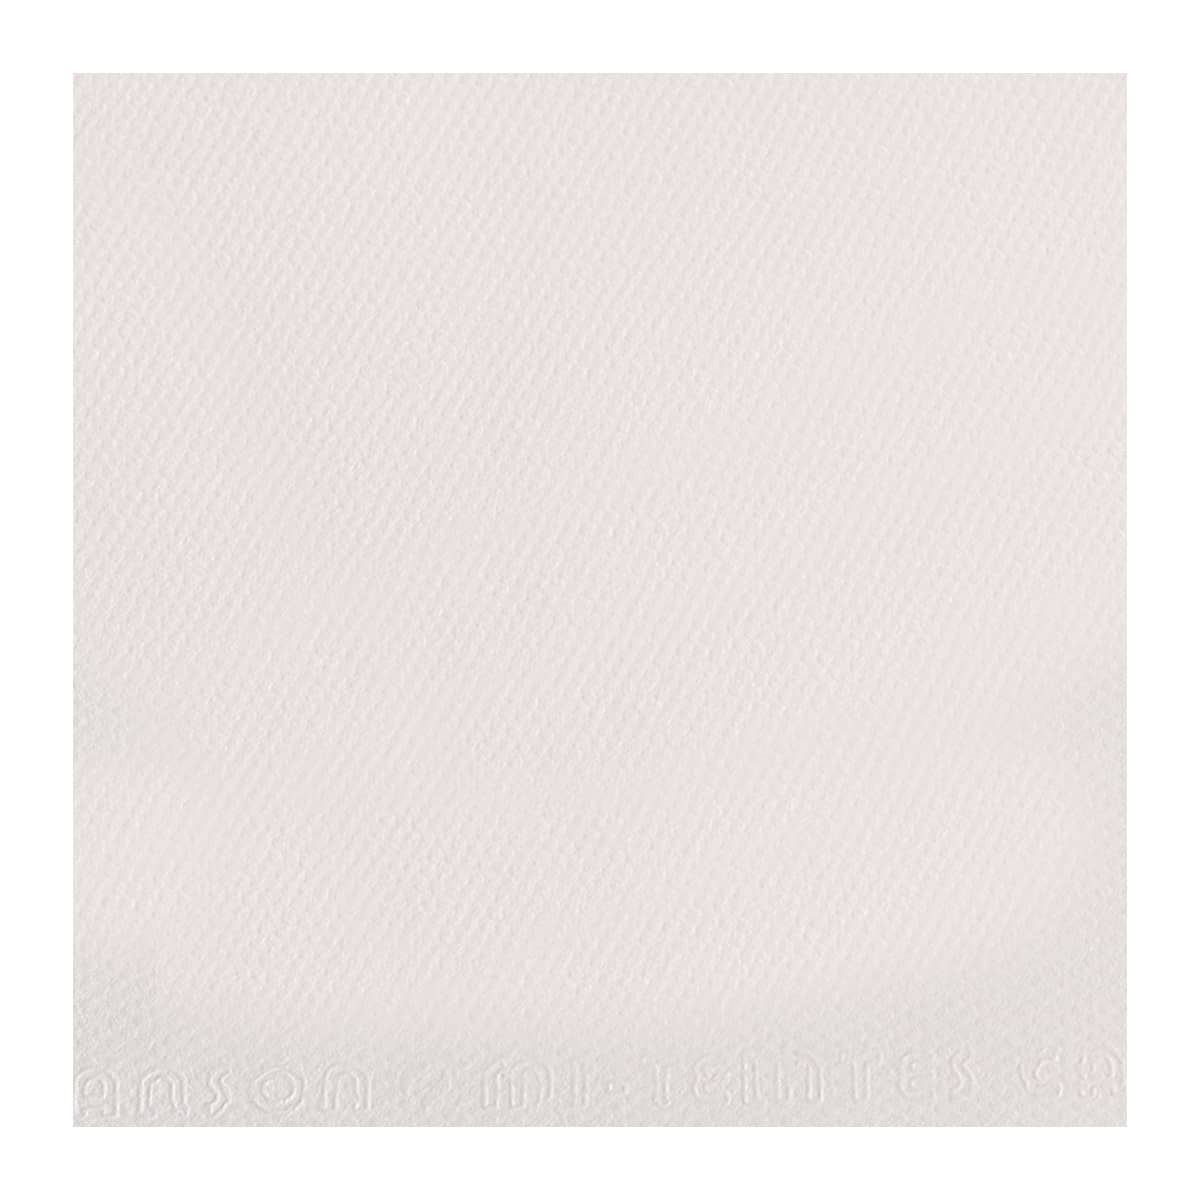 Cloudy White #180  Canson Mi-Teintes Paper 10pk 19x25 in 